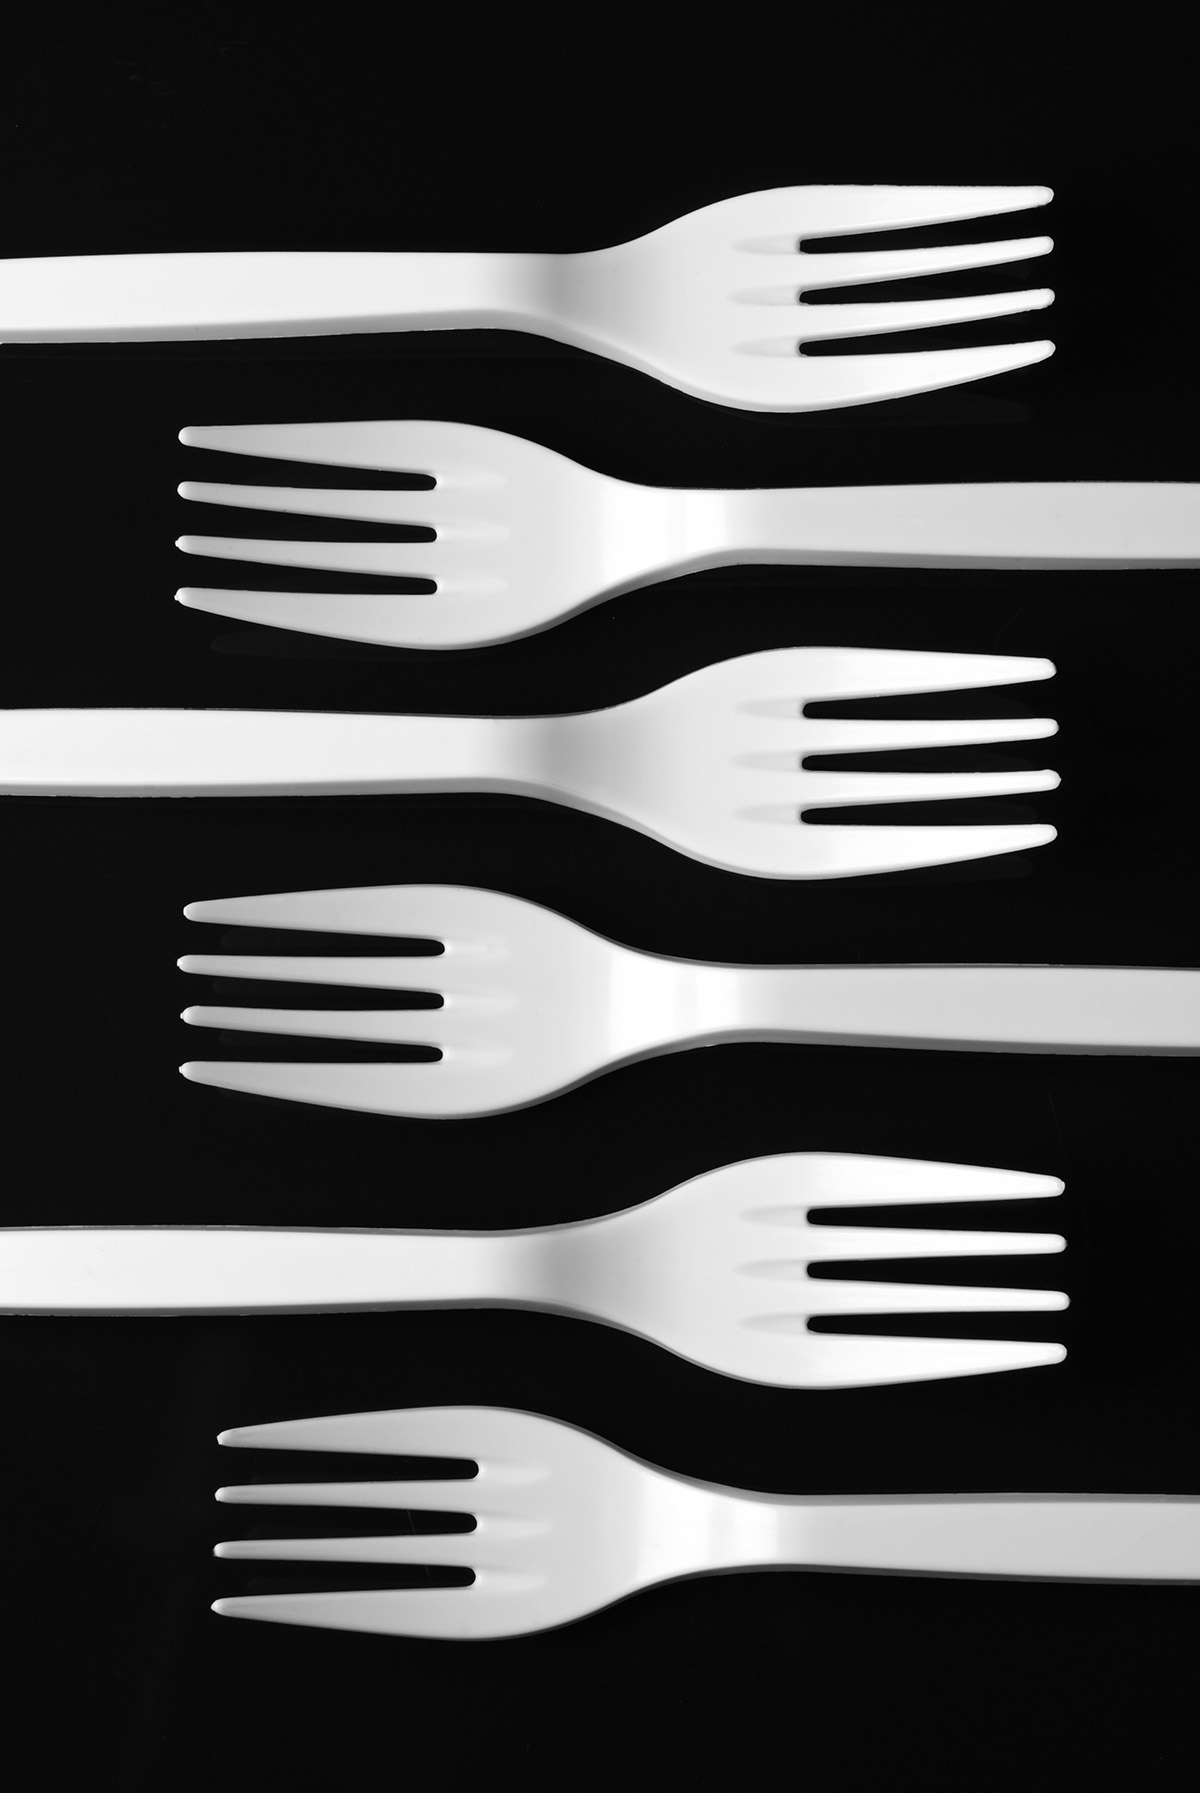 example of utensils